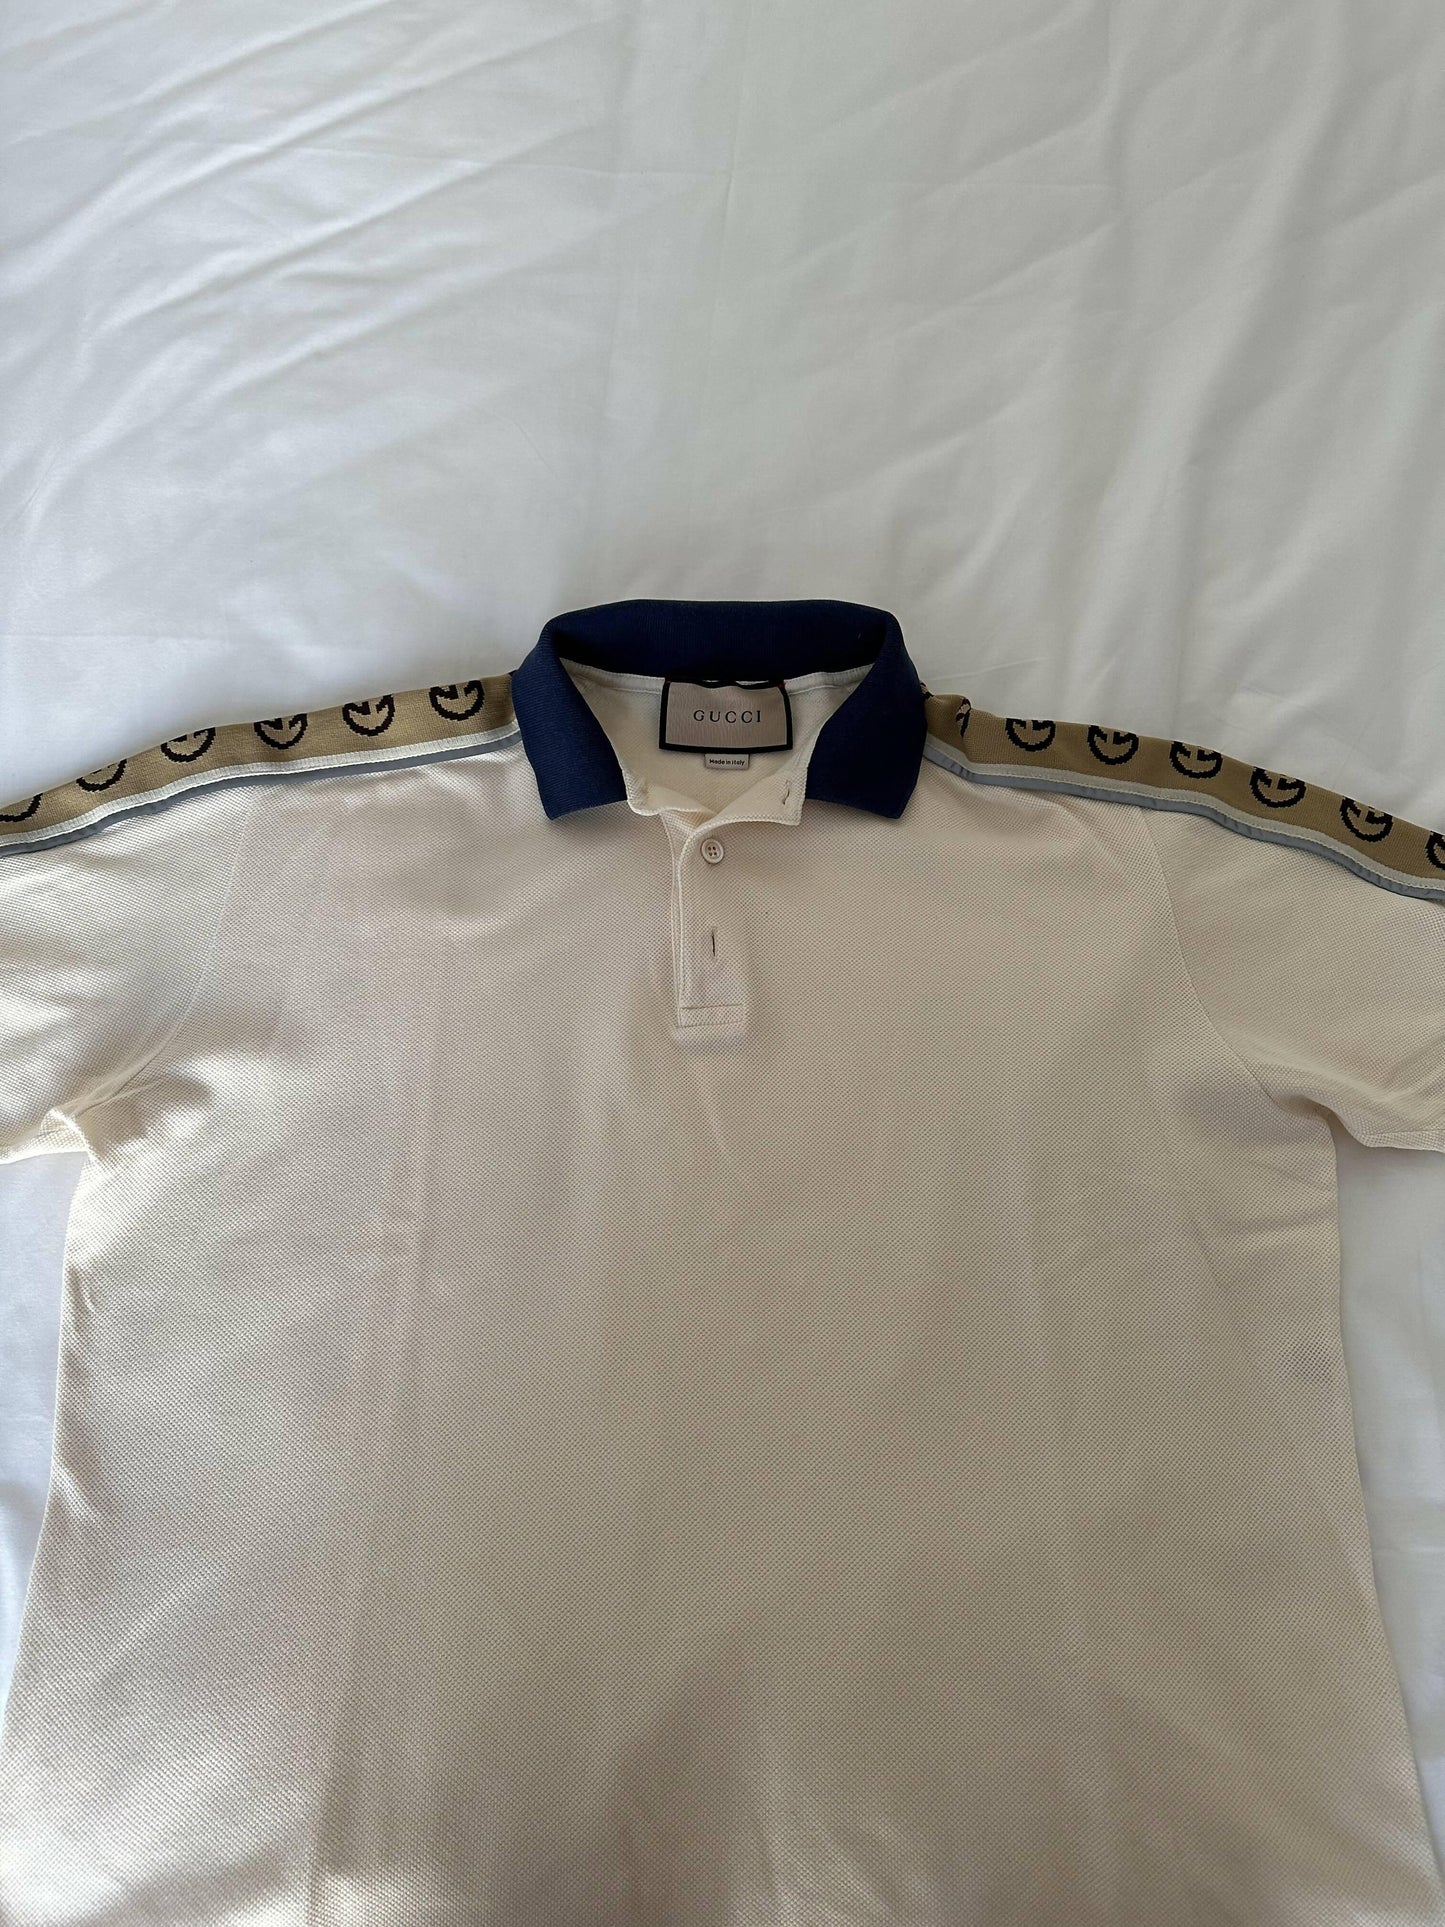 Gucci Polo T-Shirt - Endless